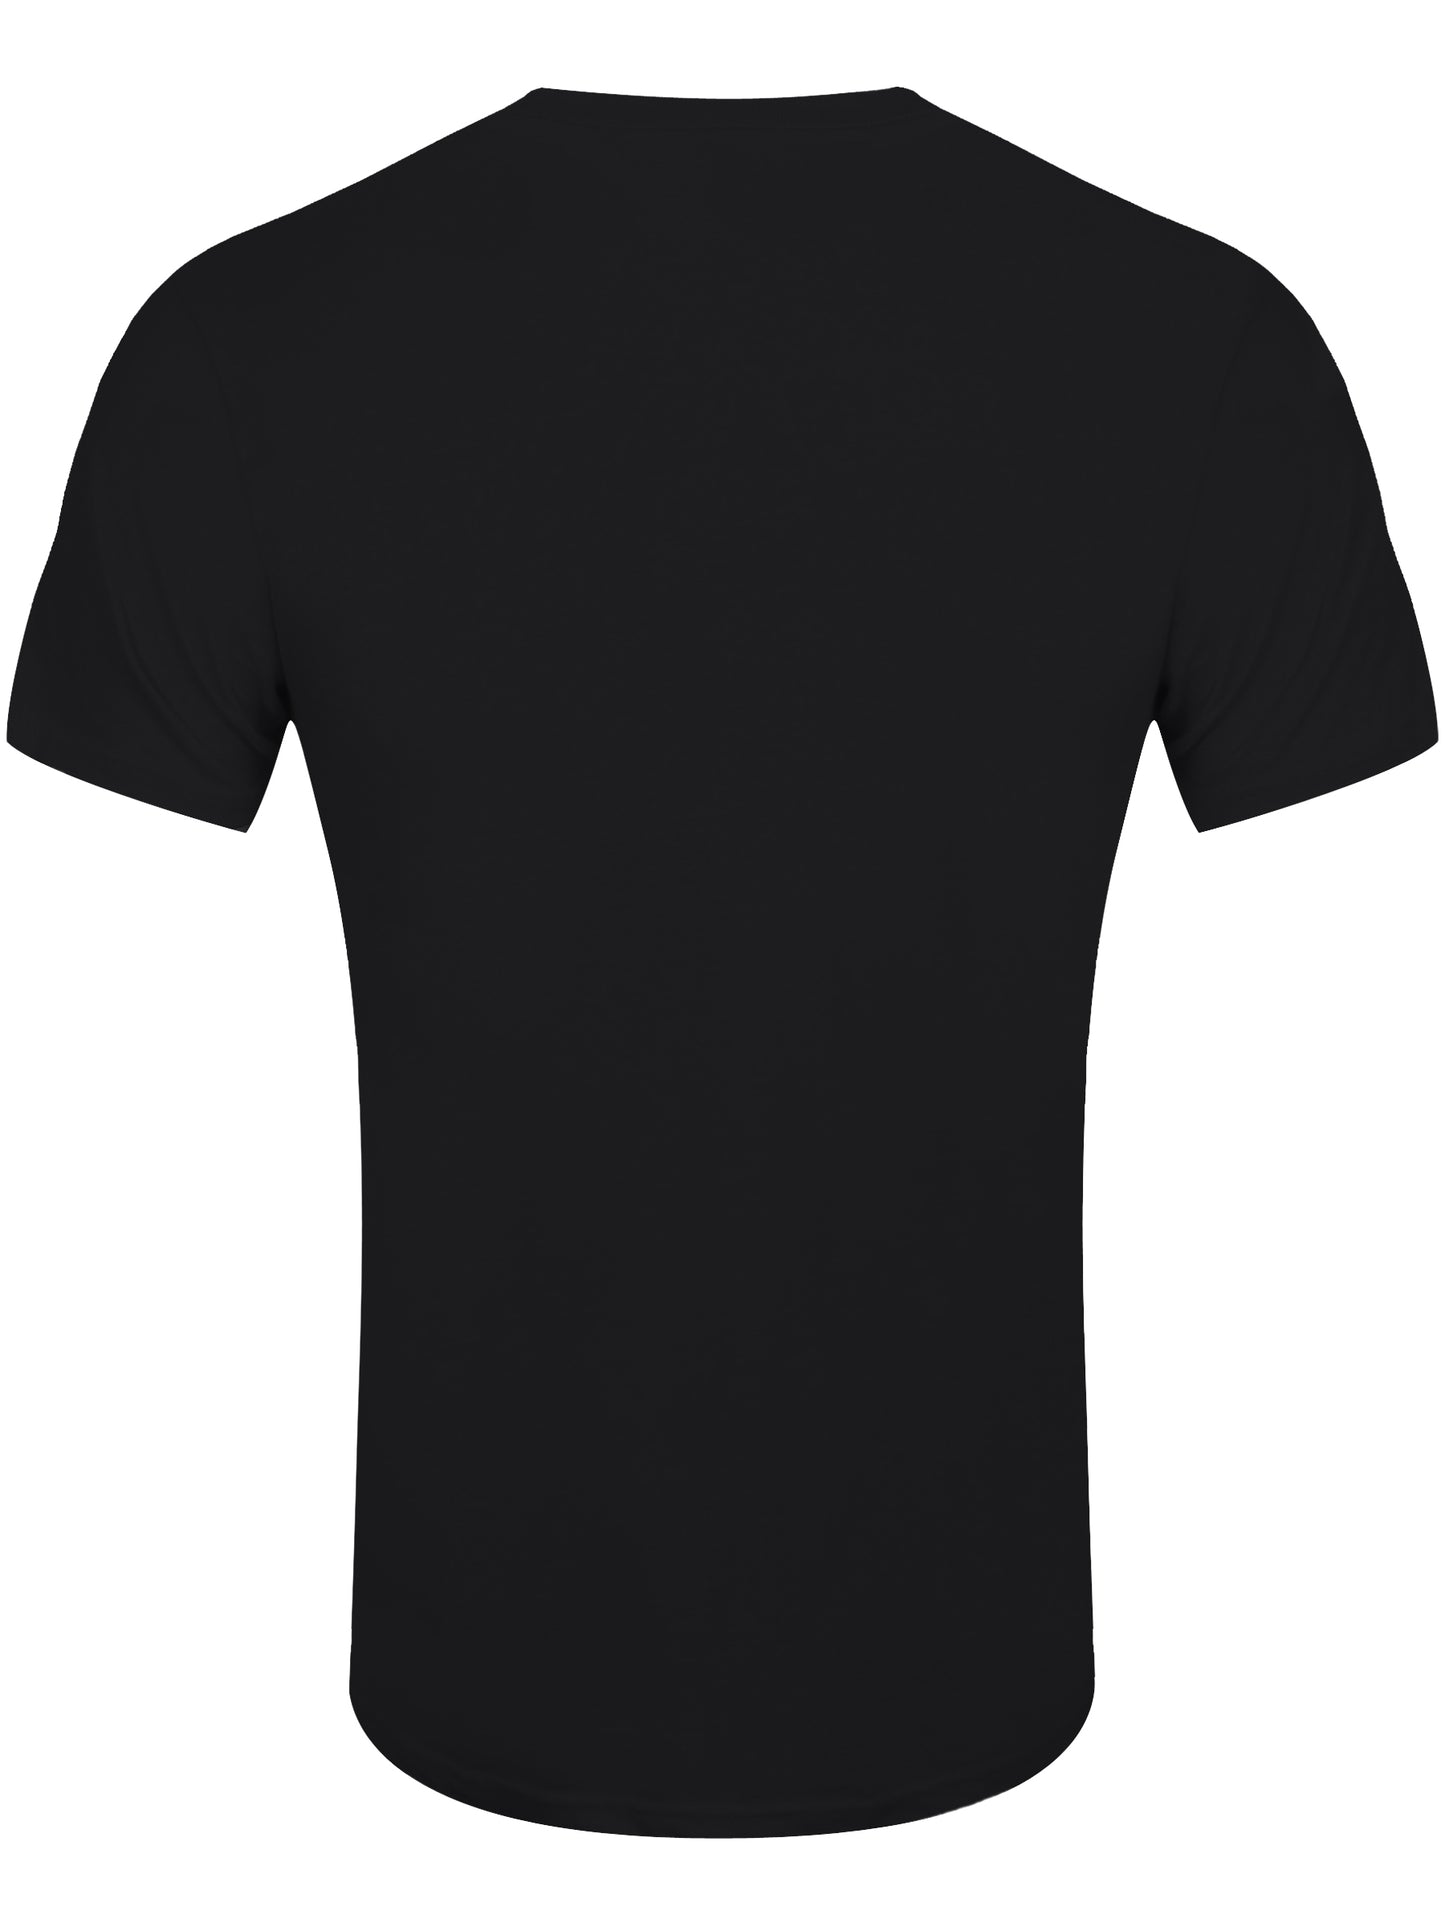 Star Wars Mandalorian Eat Sleep Levitate Men's Black T-Shirt